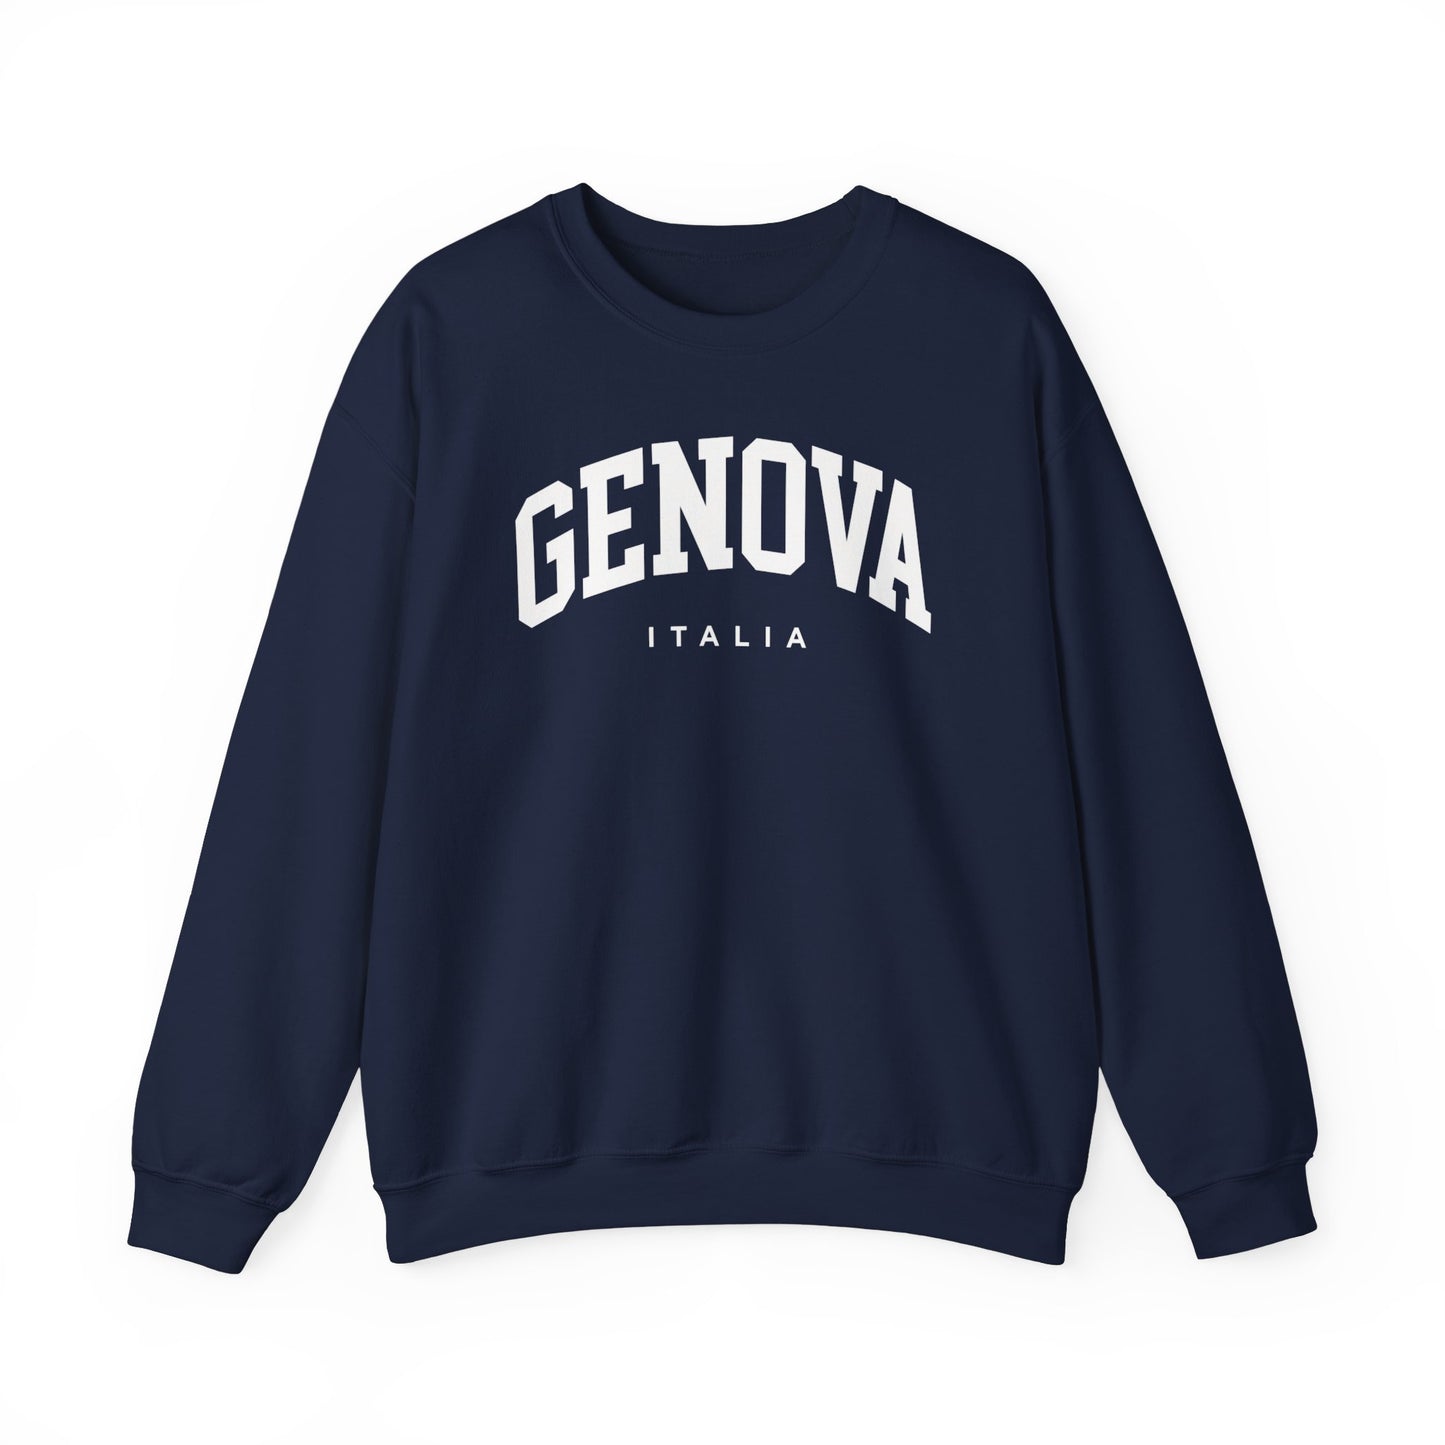 Genova Italy Sweatshirt